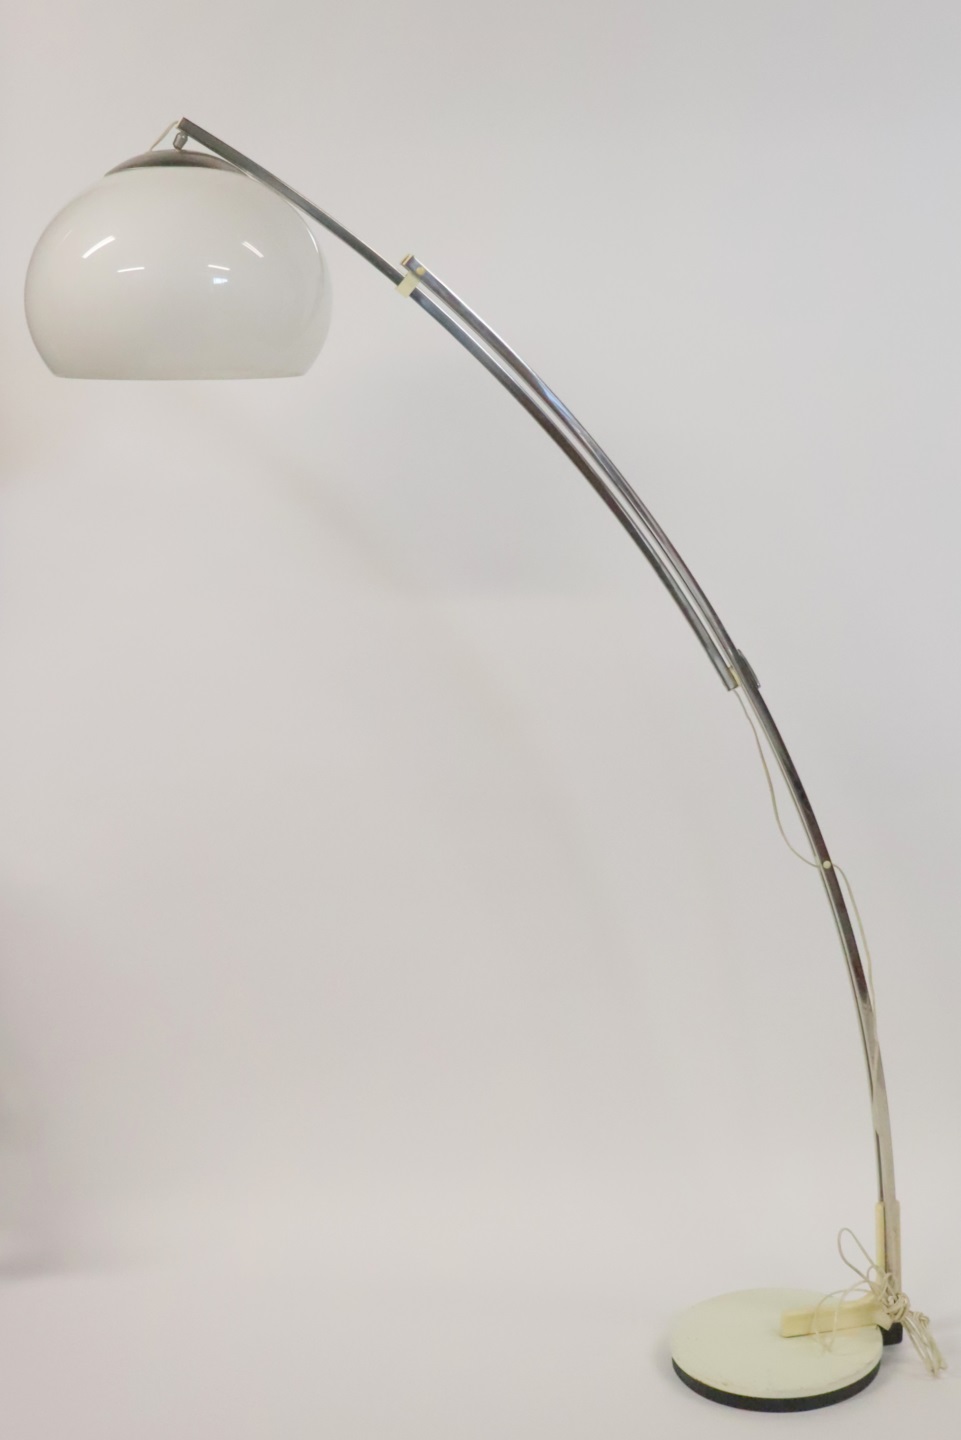 ITALIAN CHROME ENAMELED ARC LAMP 3be420